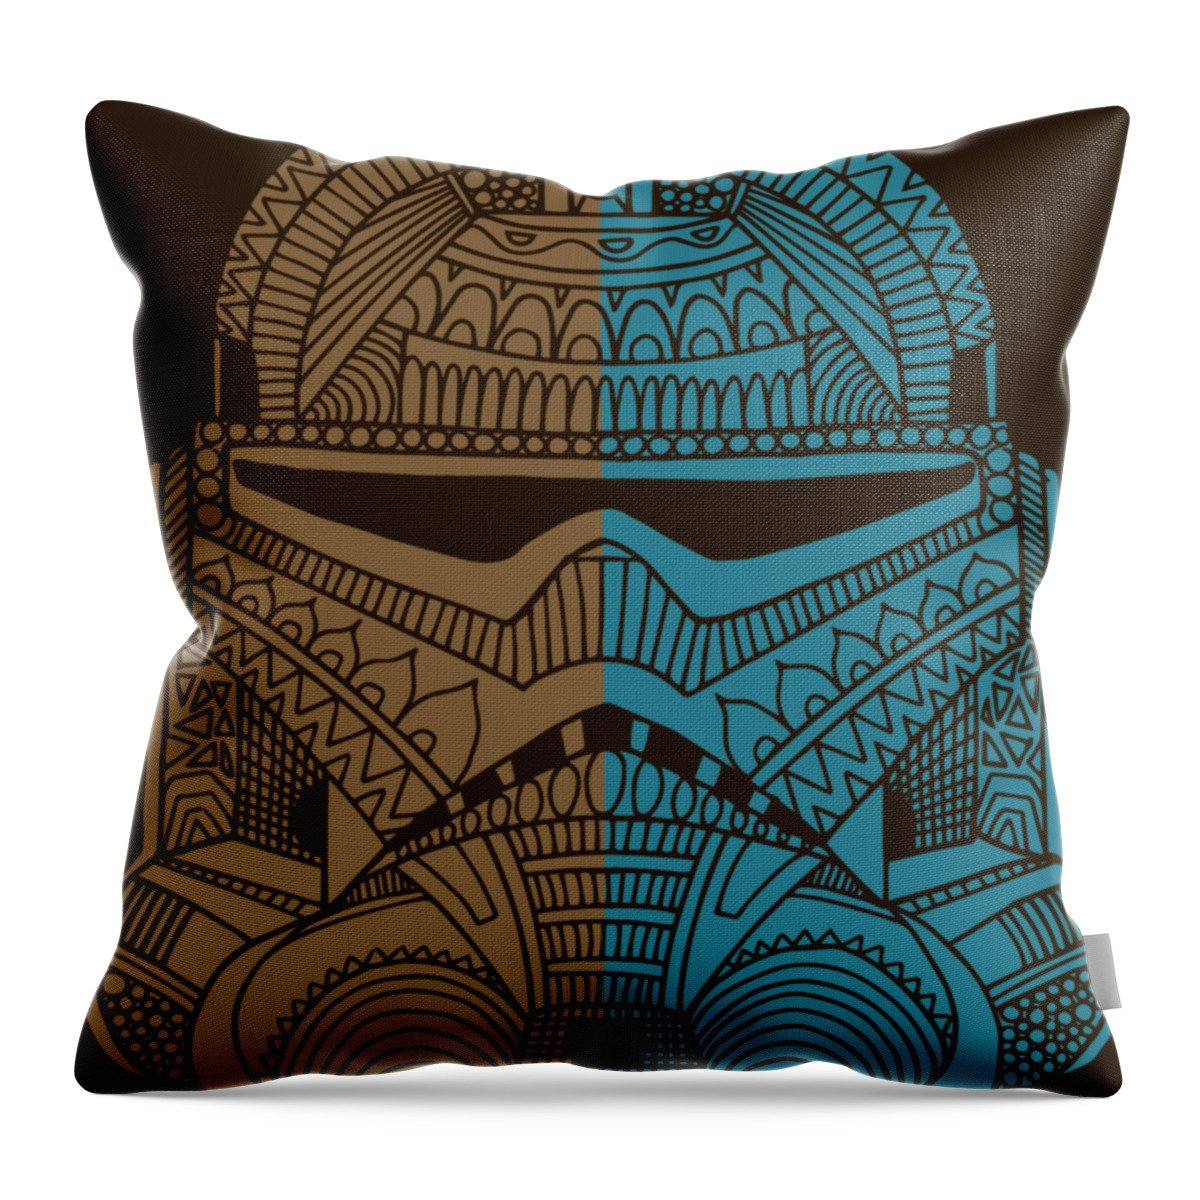 Stormtrooper Throw Pillow featuring the mixed media Stormtrooper Helmet - Star Wars Art - Brown Blue by Studio Grafiikka